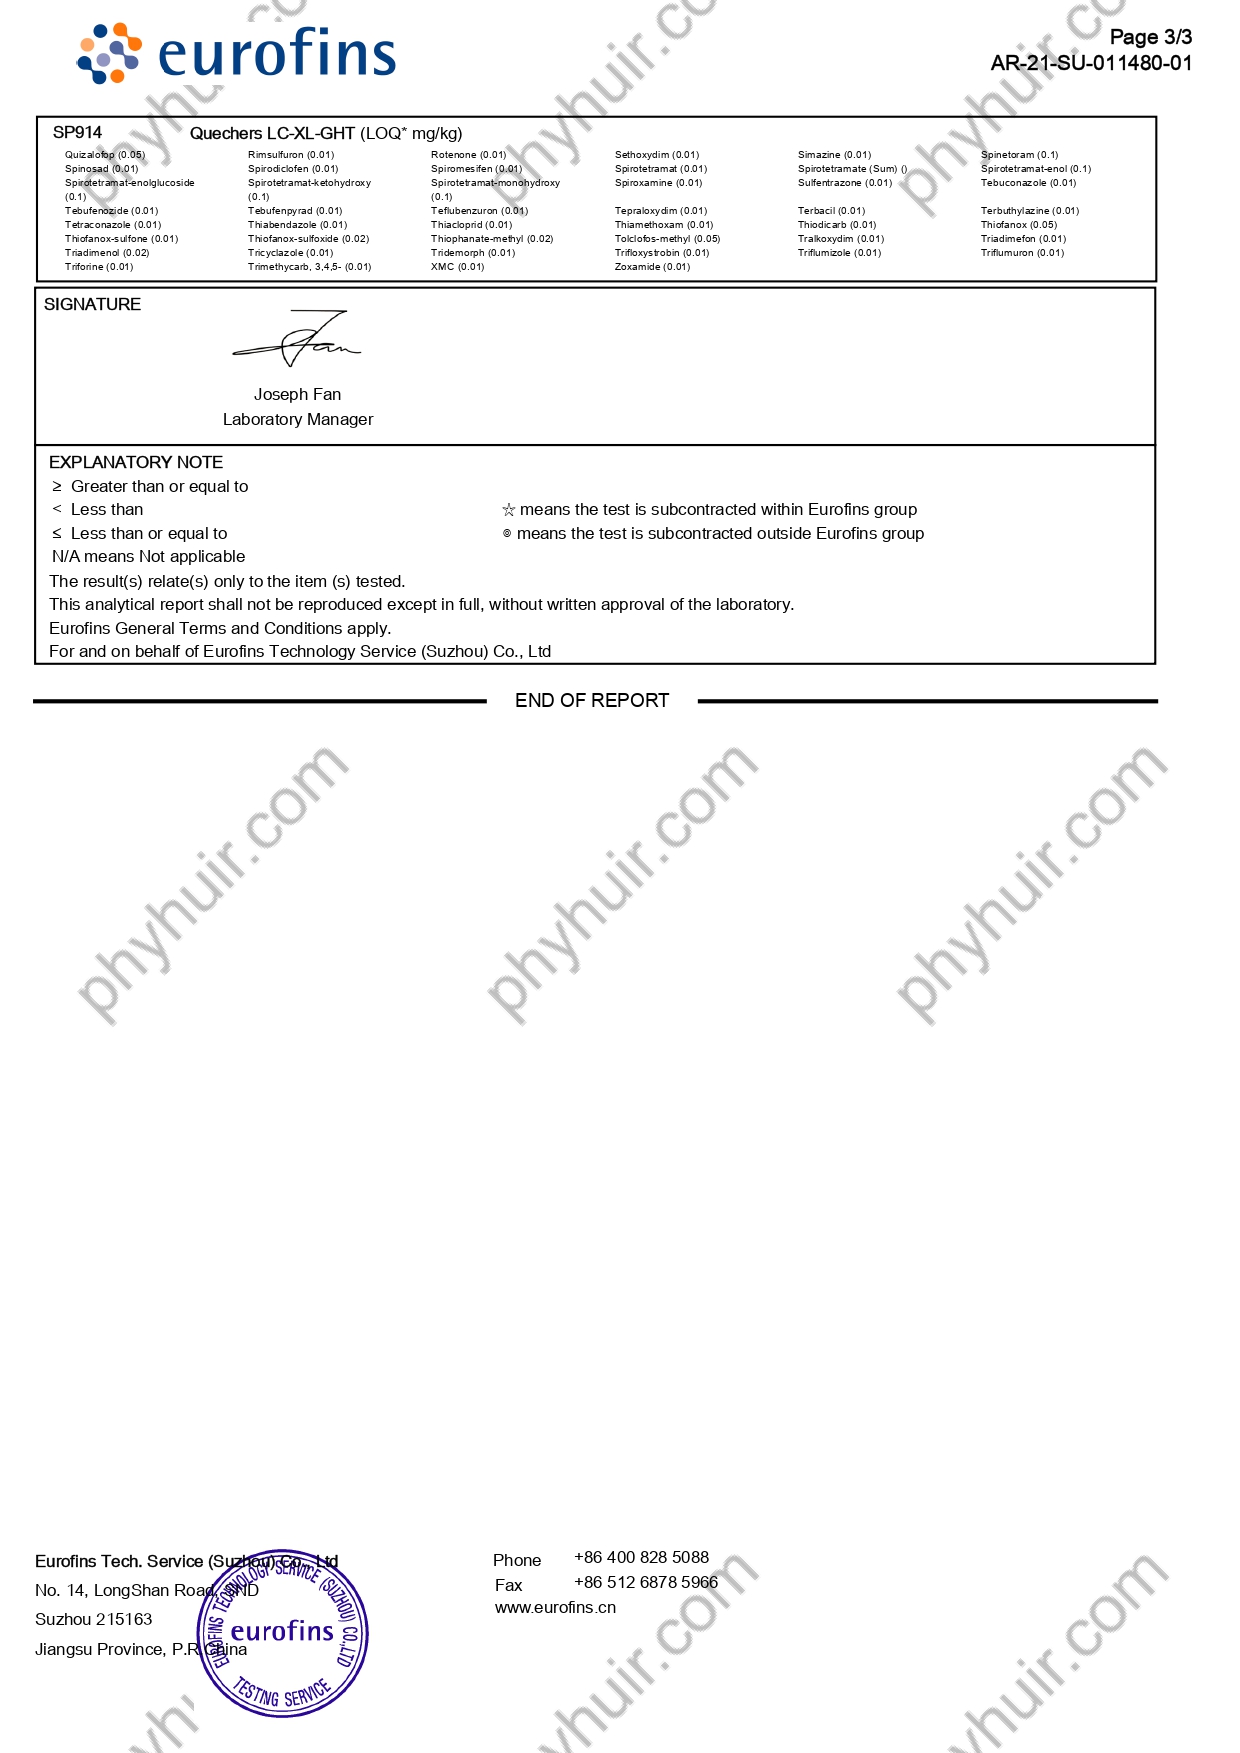 21030117 (AR-21-SU-011480-01) Quercetin PAH, Heavy Metal, Pesticides_watermark_page-0003.jpg